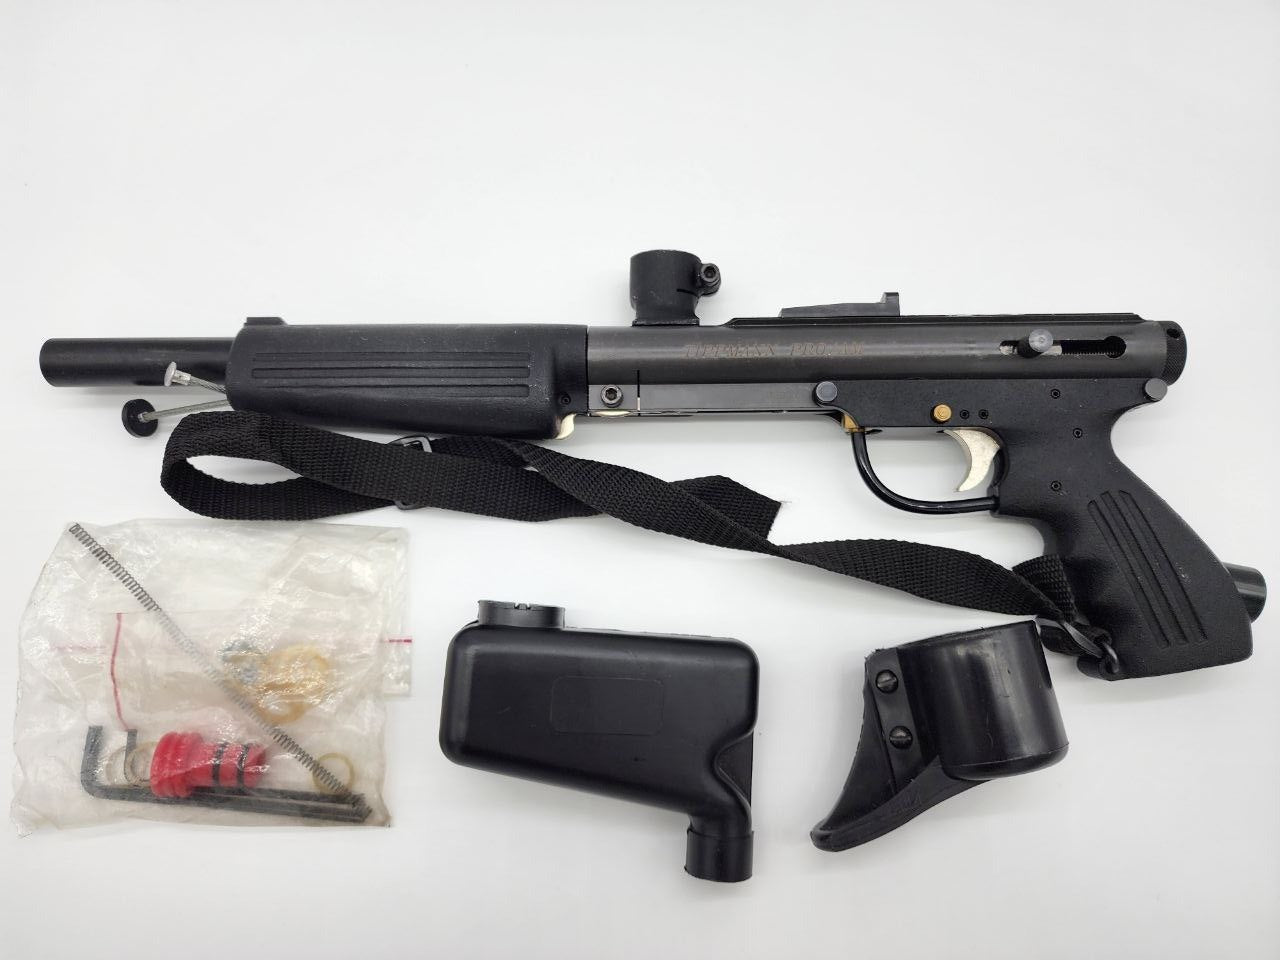 Tippmann 98 carbine Paintball Marker | Original case | Rare & Mint | Pre-Owned